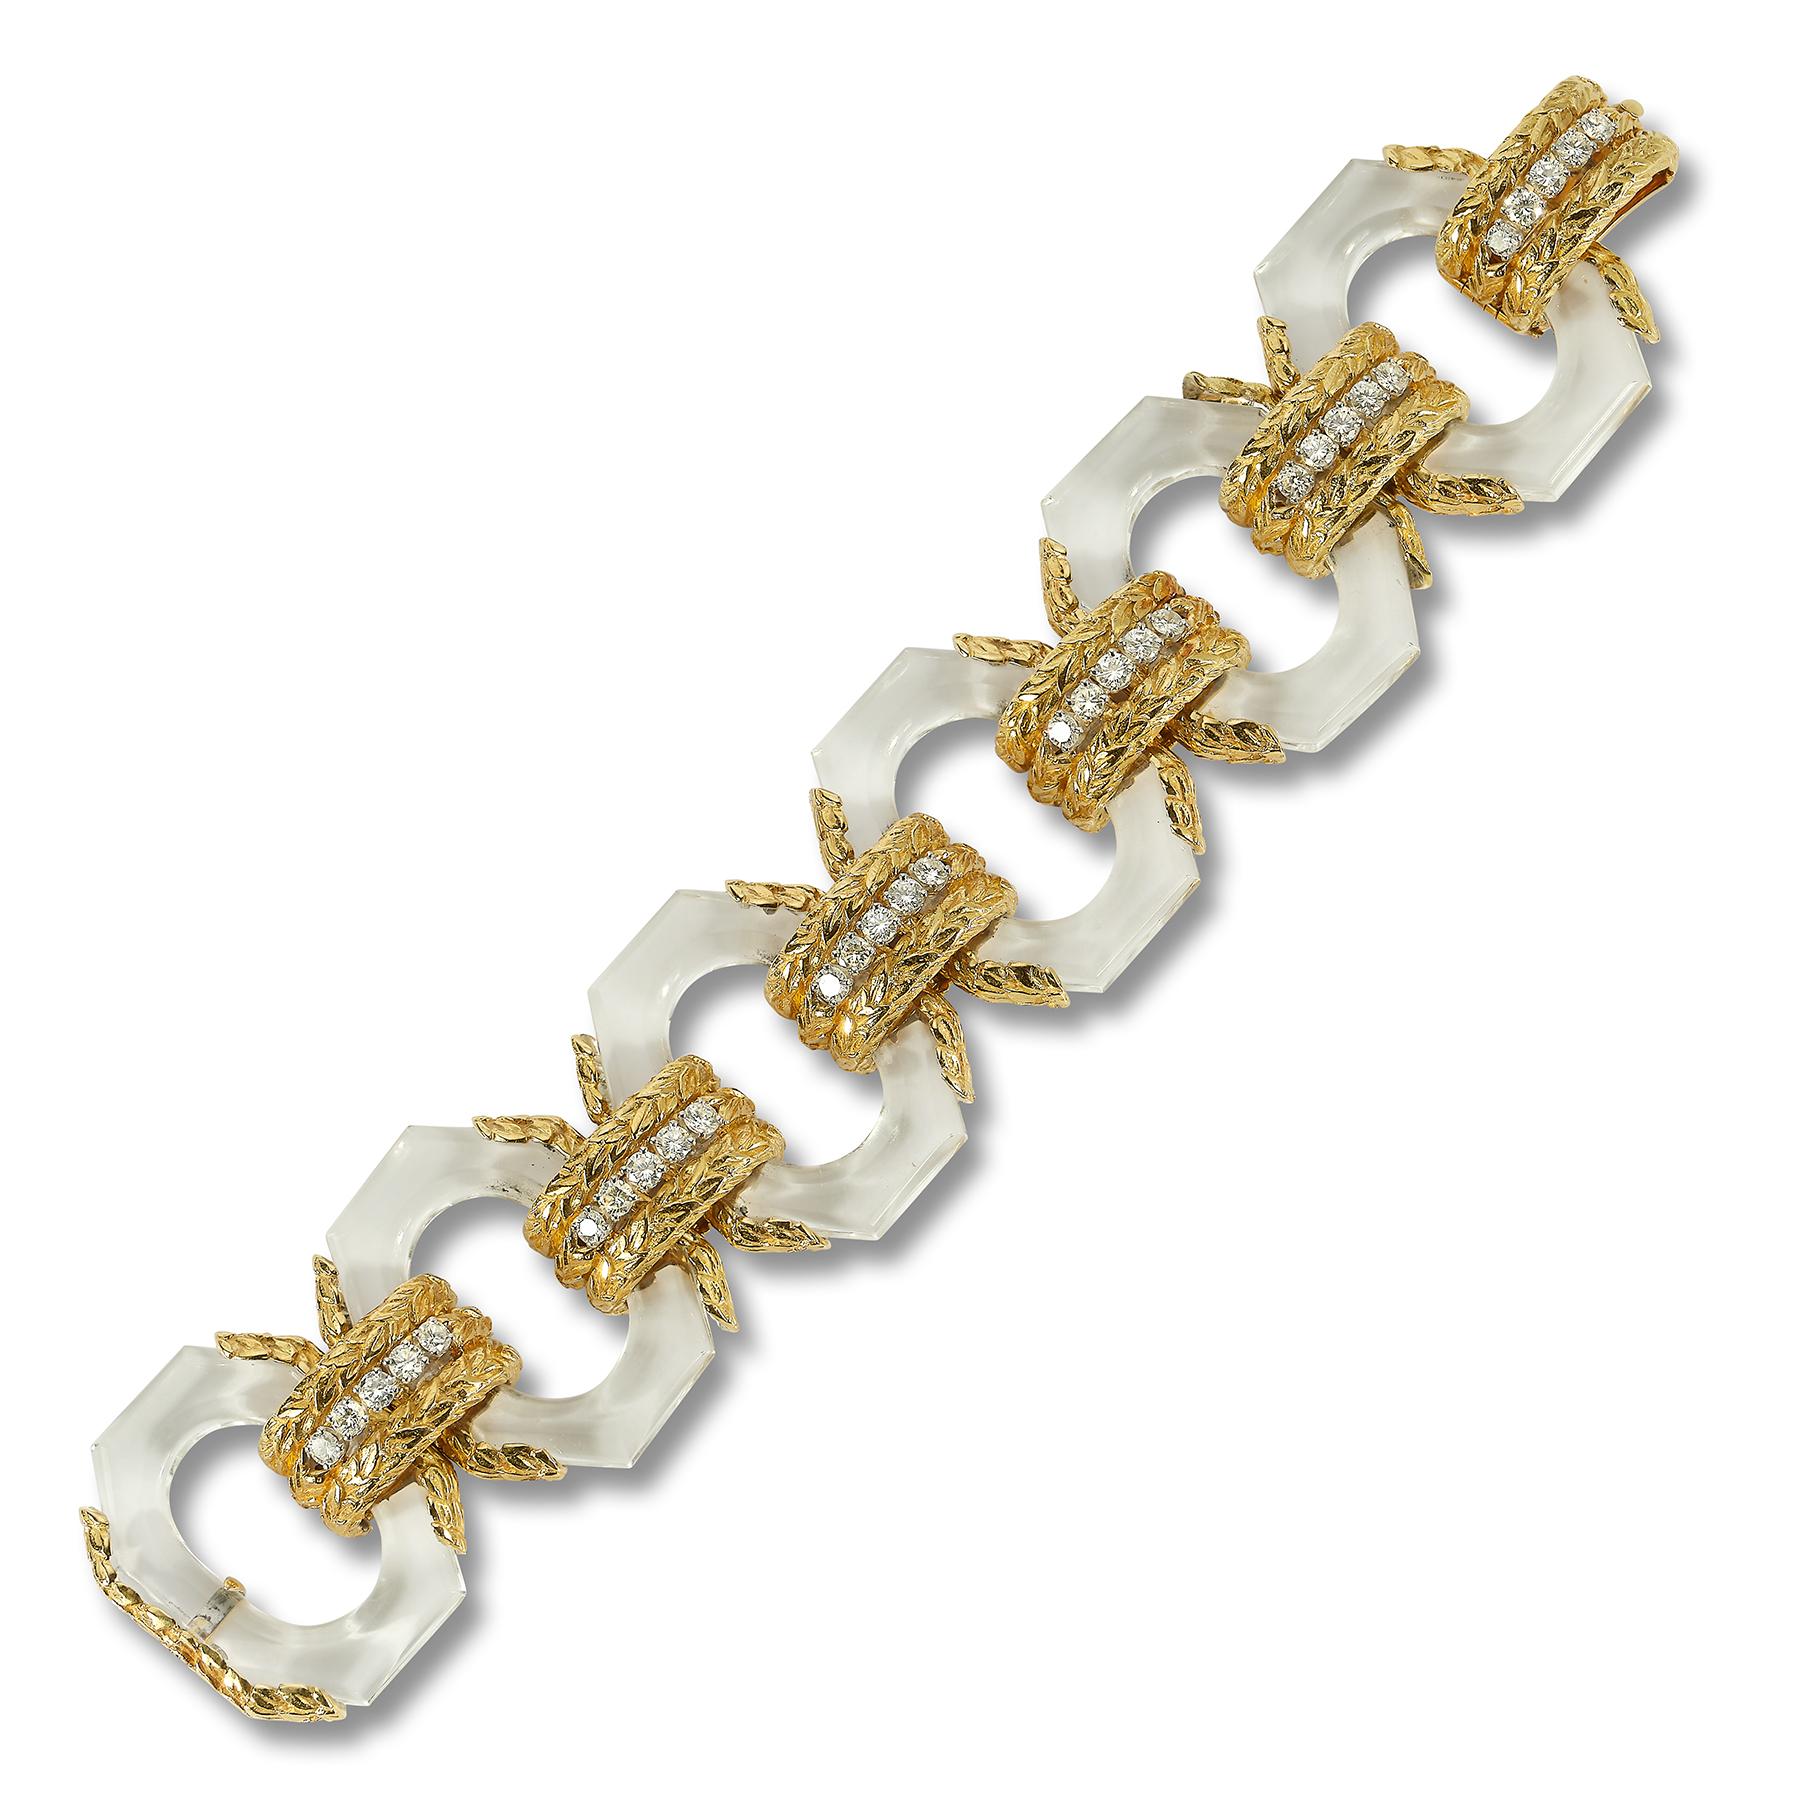 David Webb Rock Crystal & Diamond Bracelet

6 links of rock crystal set with diamonds & gold.

Measurements: 7.5